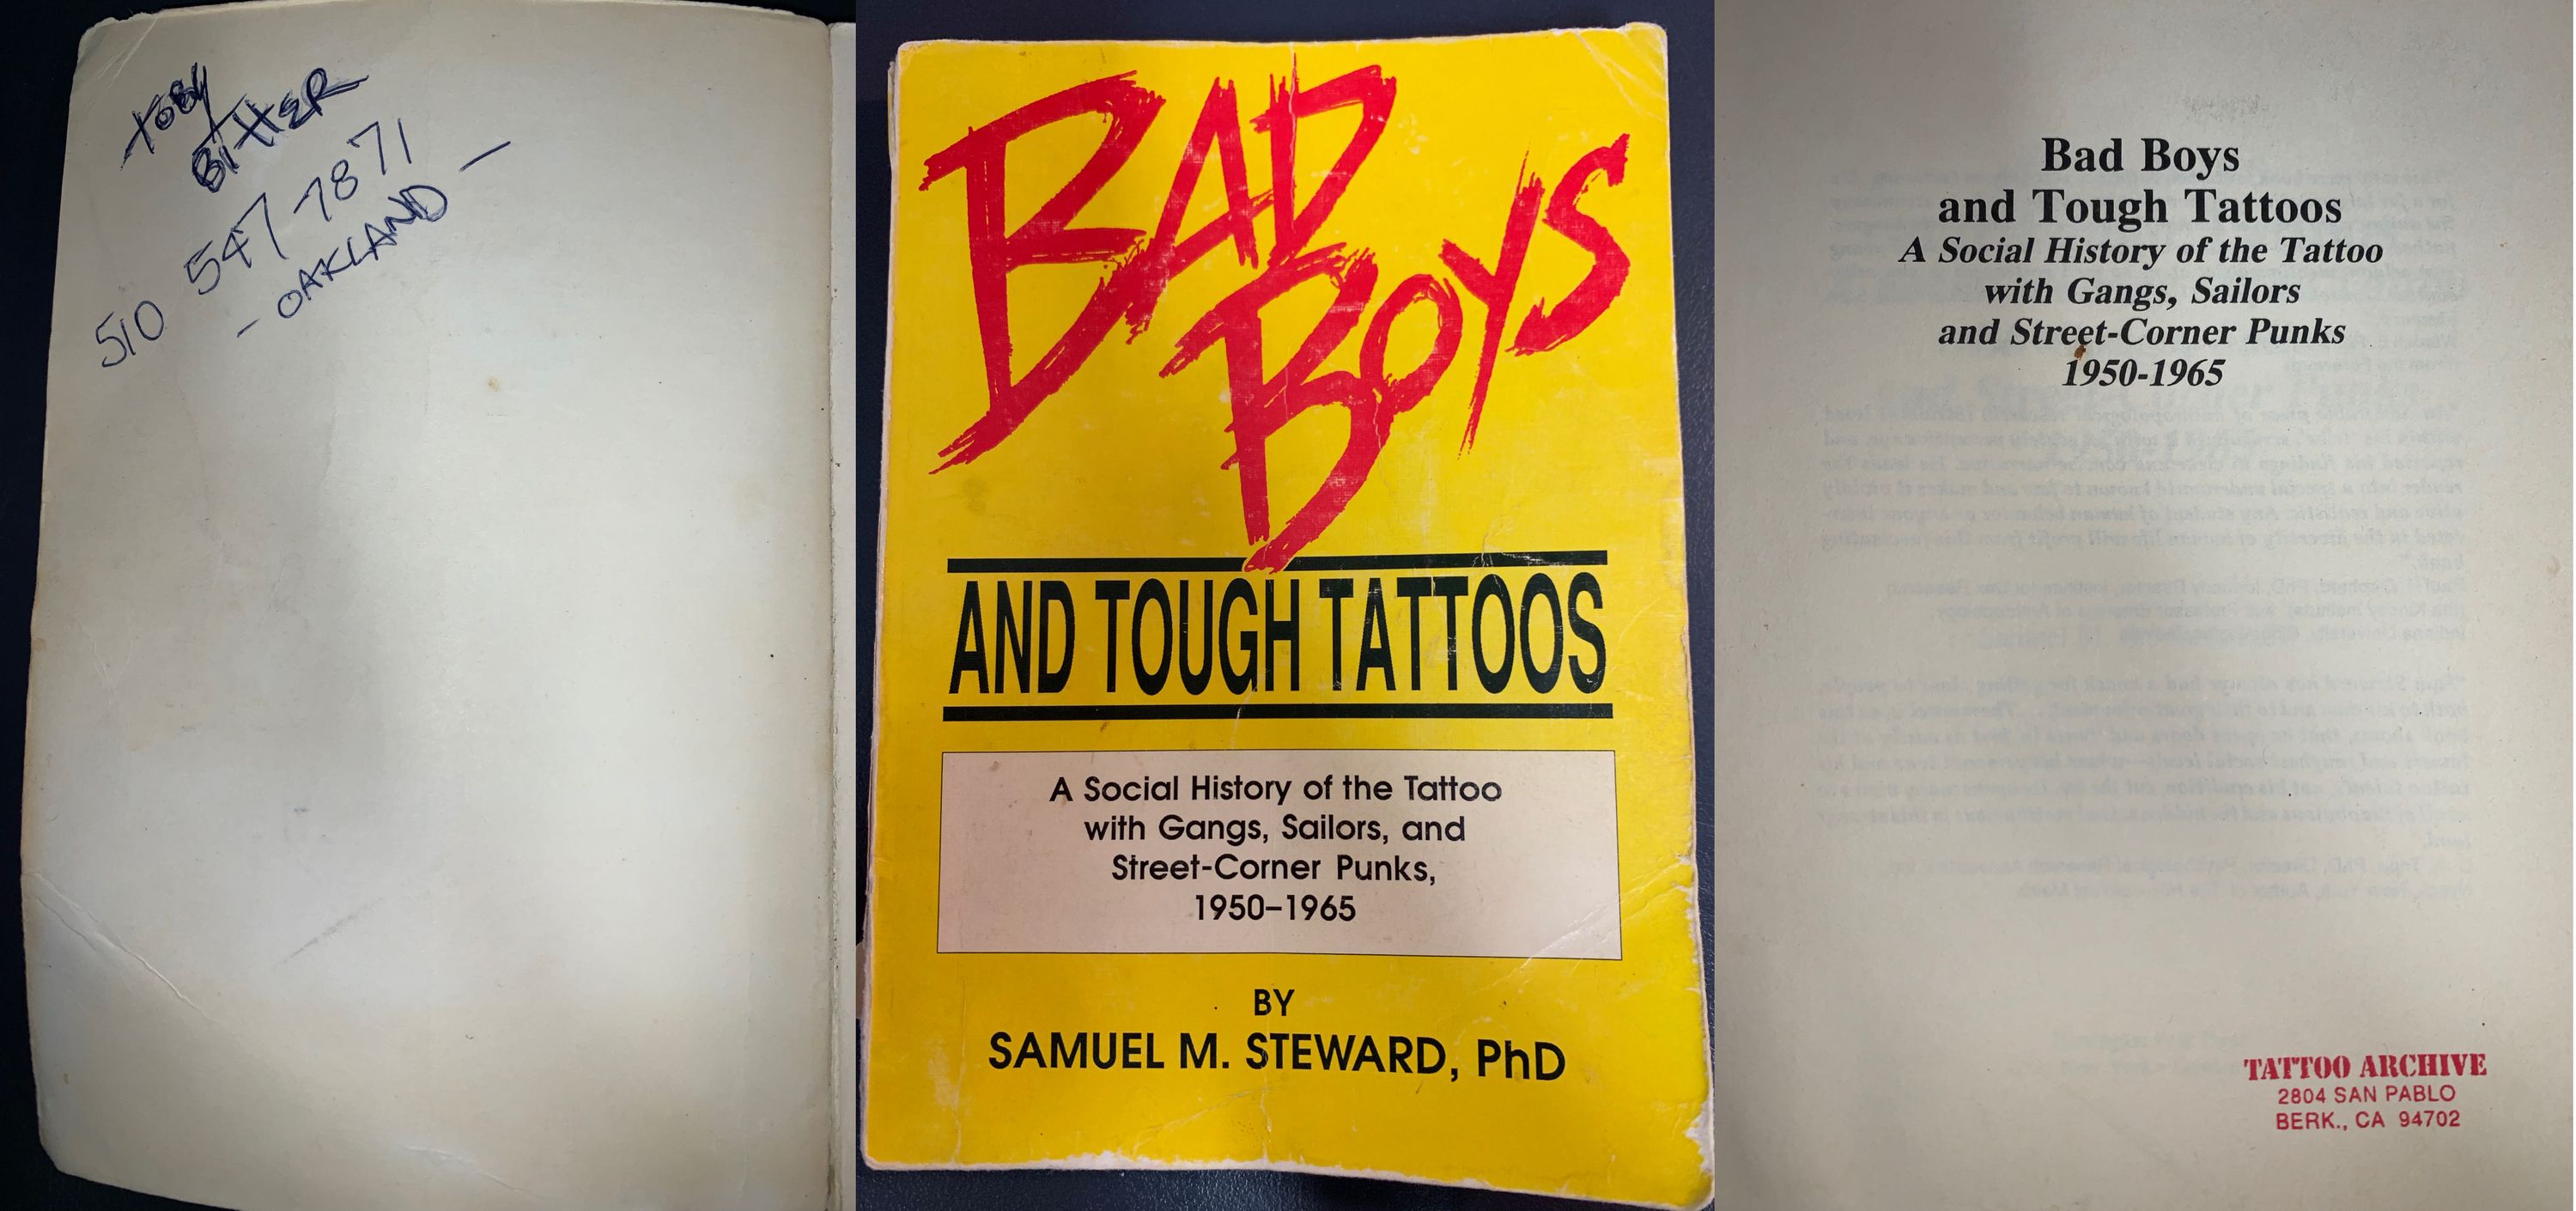 bad boys and tough tattoos